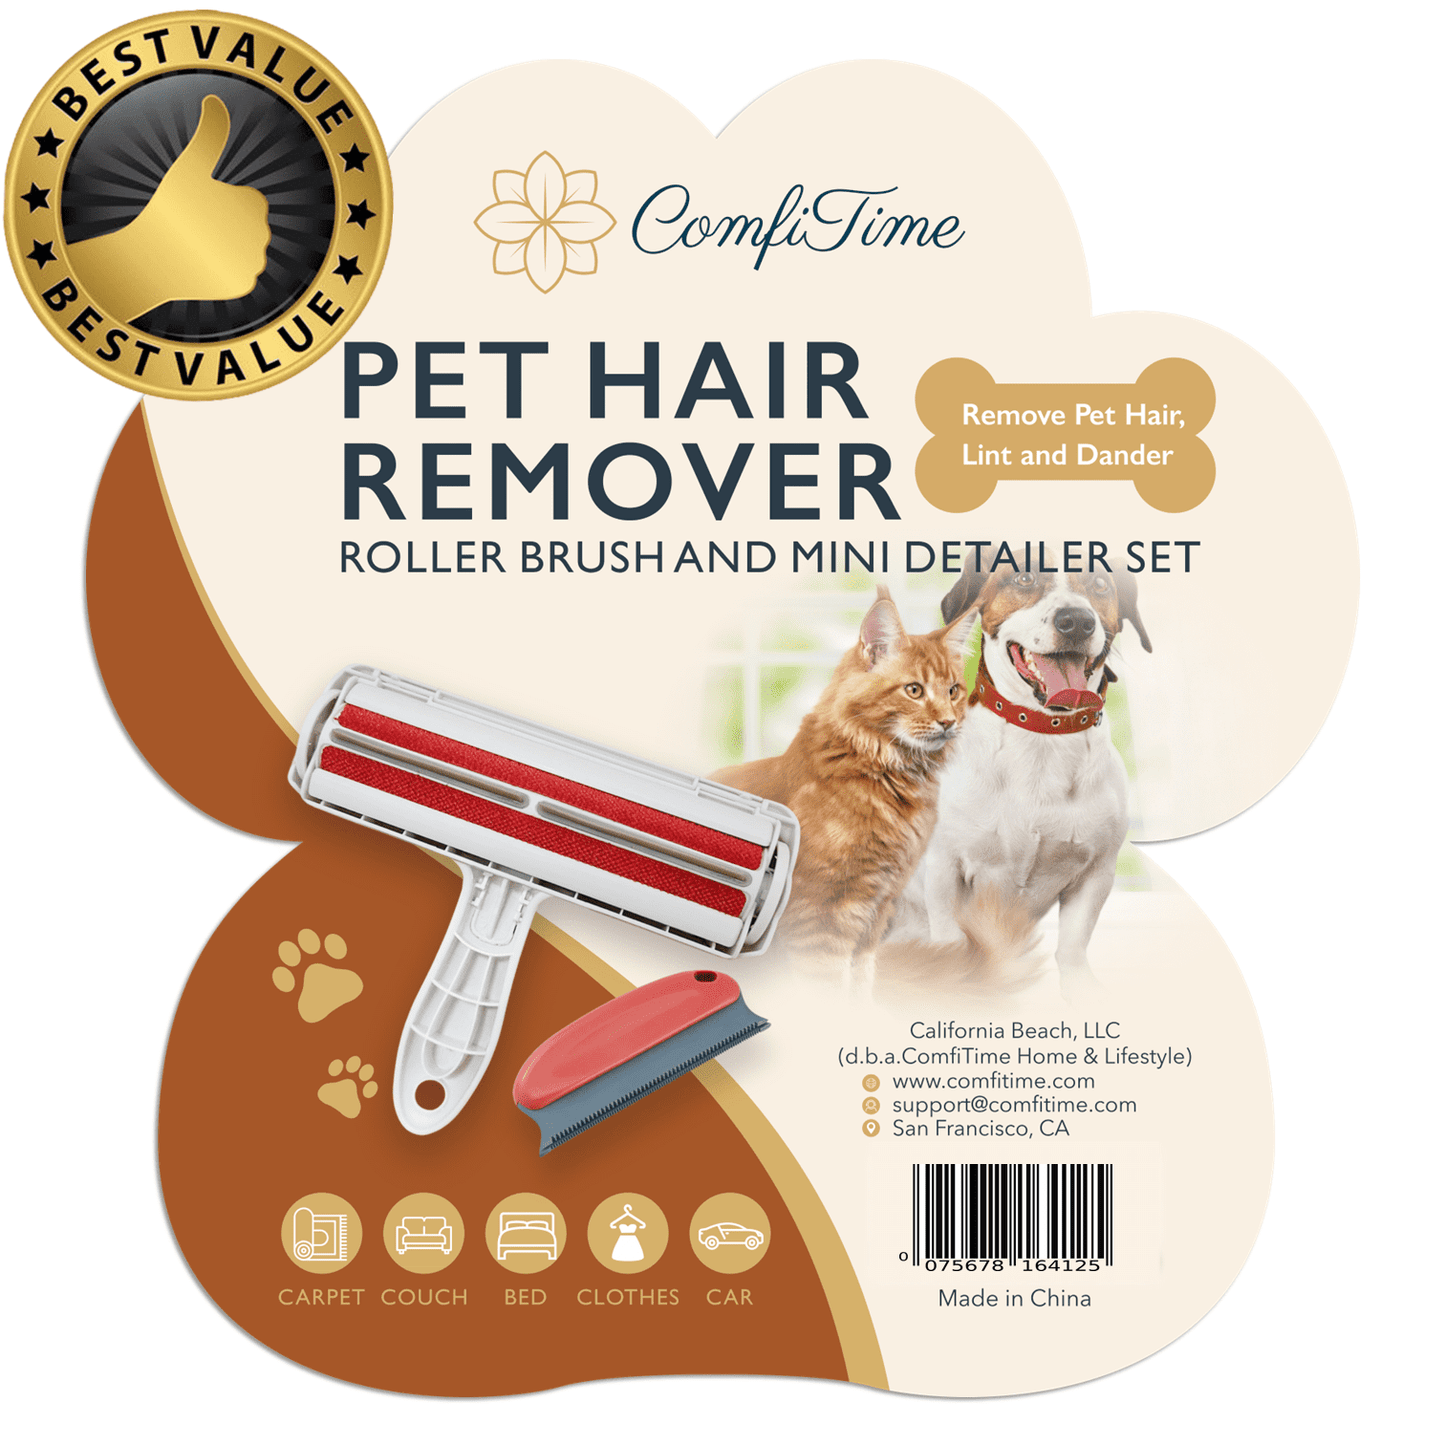 Pet Hair Remover Tool Set - Roller Brush, Mini Detailer